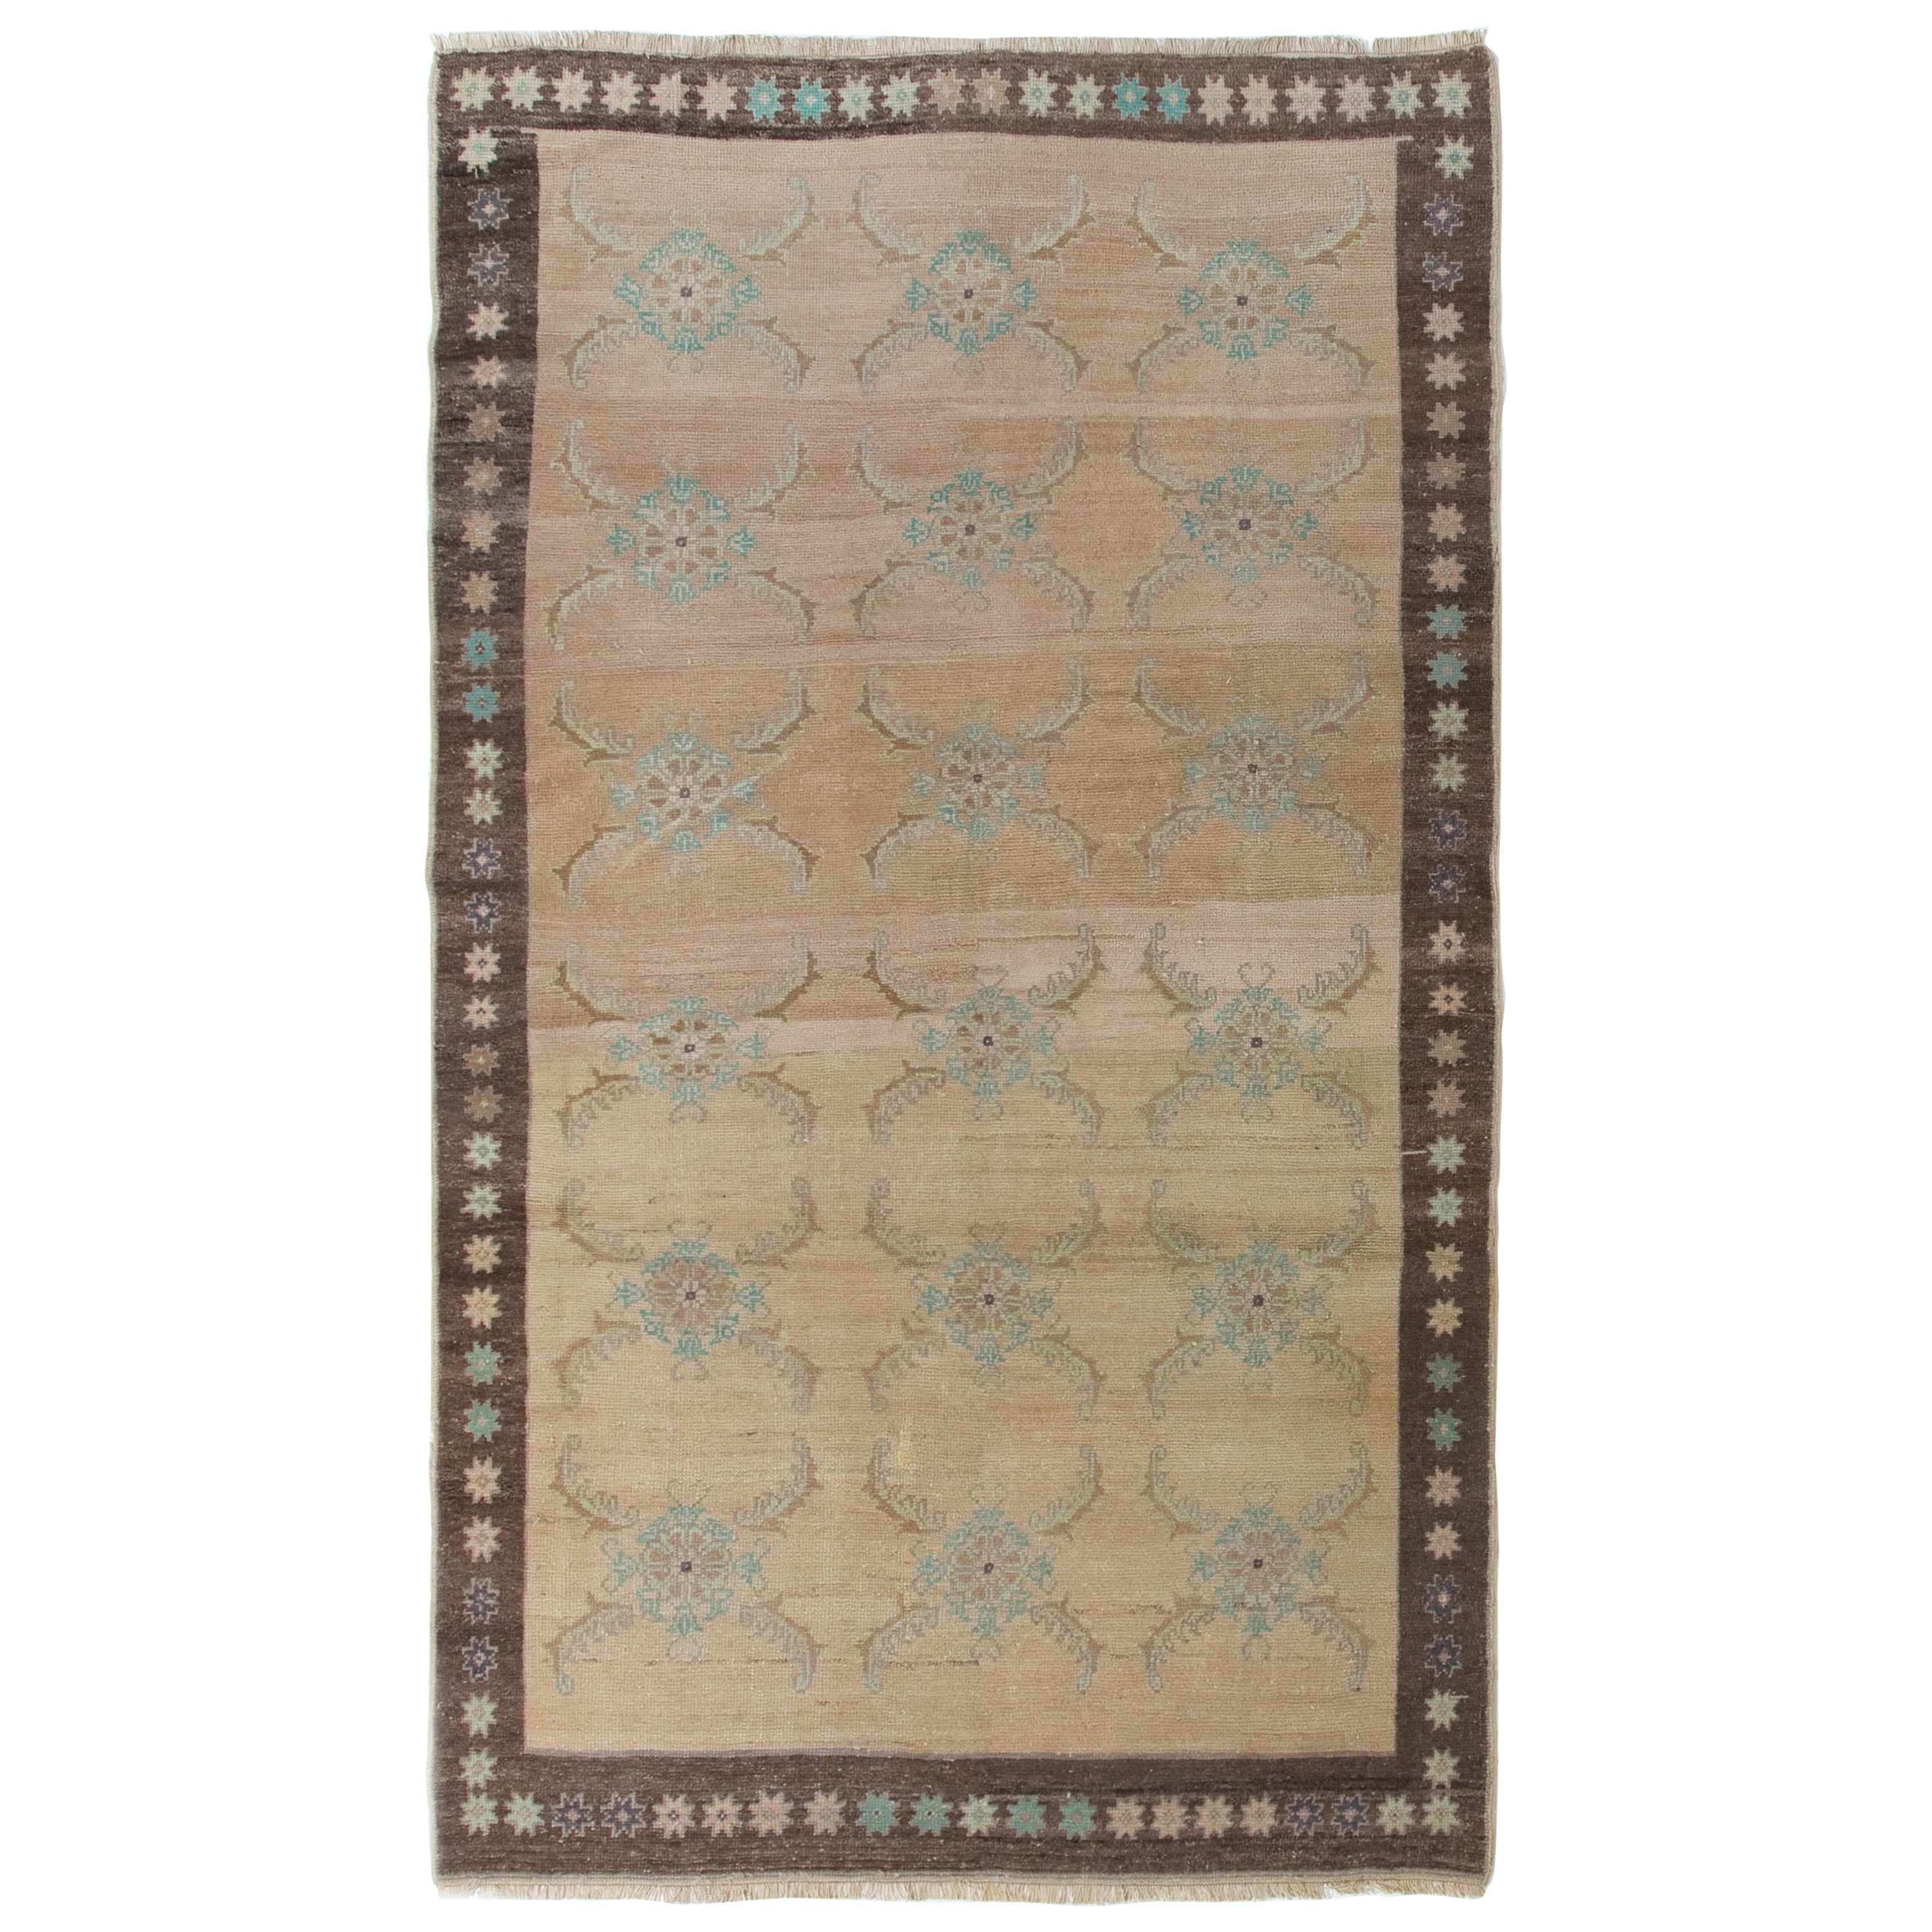 4.4x7.6 Ft Vintage Wool Rug from Karapinar / Turkey, Handmade Floral Carpet